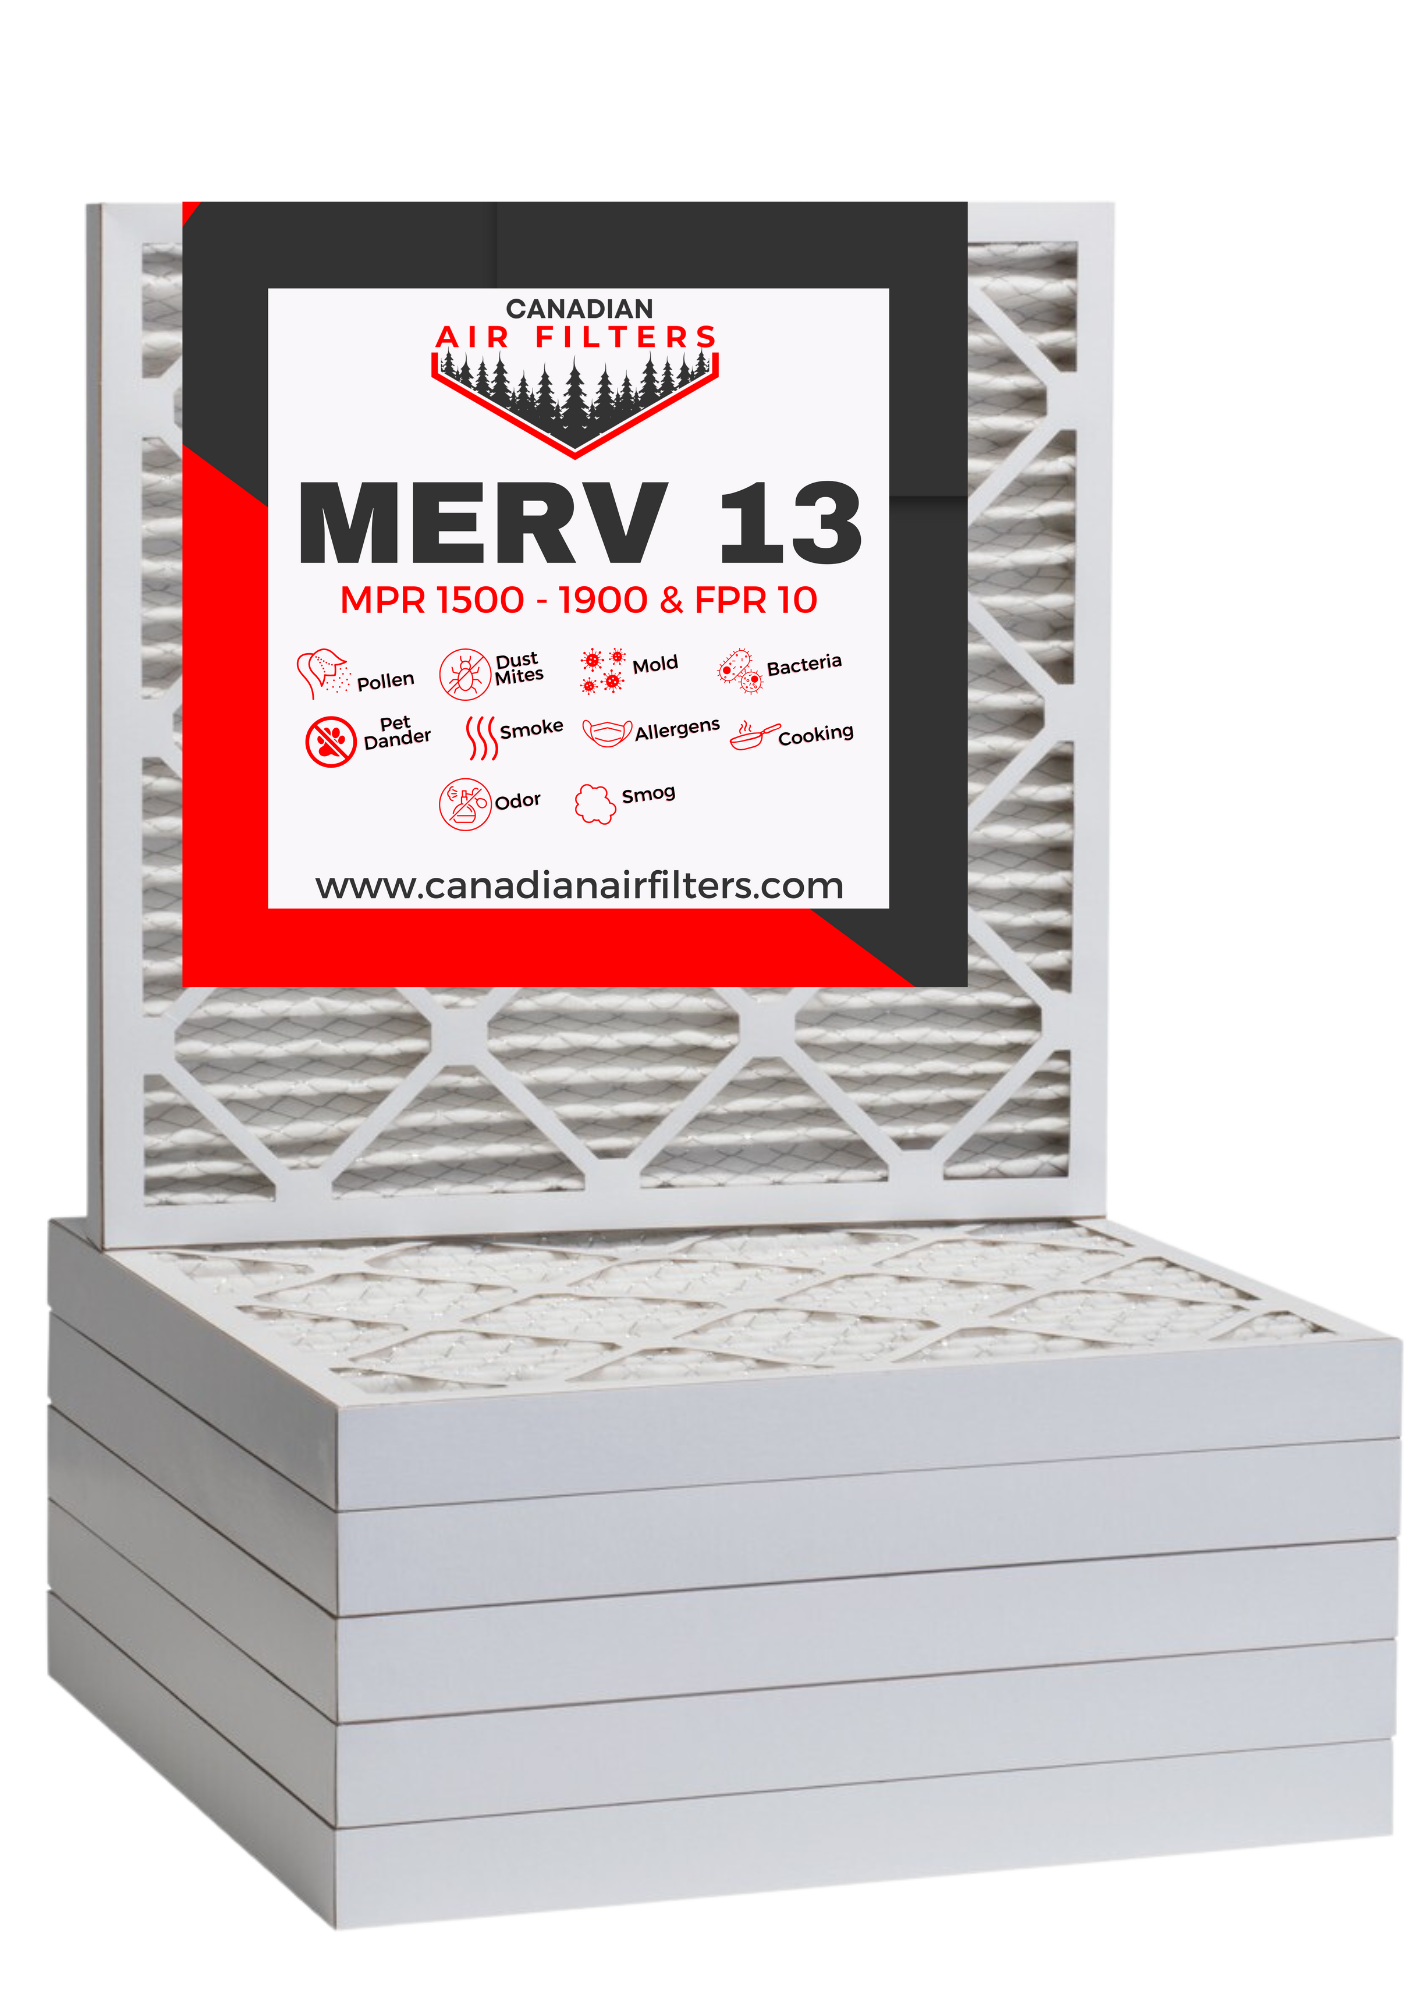 27.75 x 29.5 x 2 MERV 13 Pleated Air Filter (06 pack)